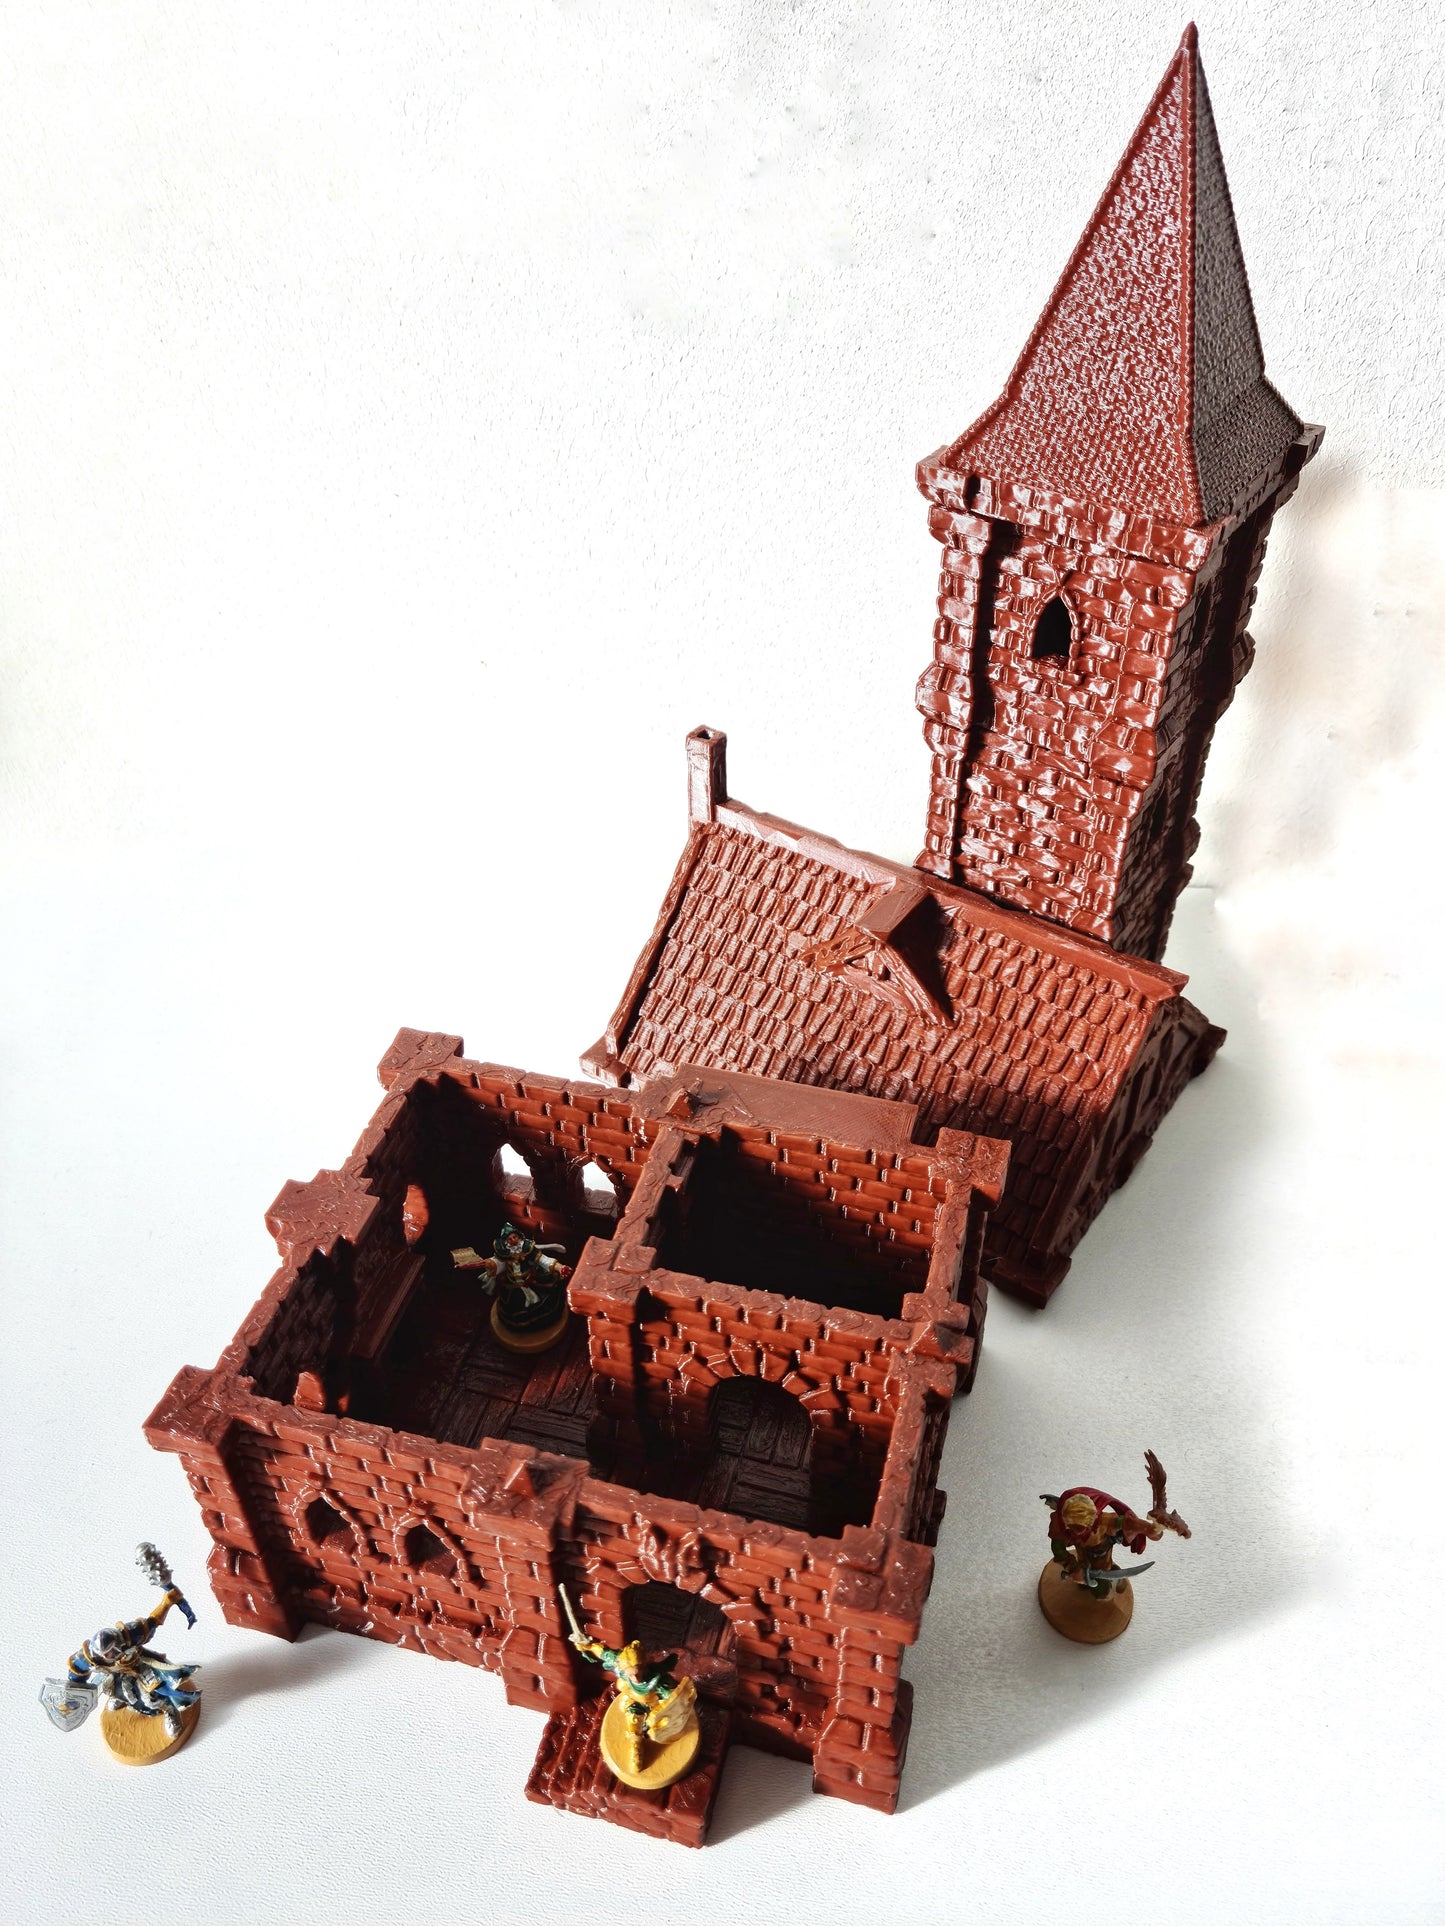 Tower house from the Ulvheim set by WonderWorlds